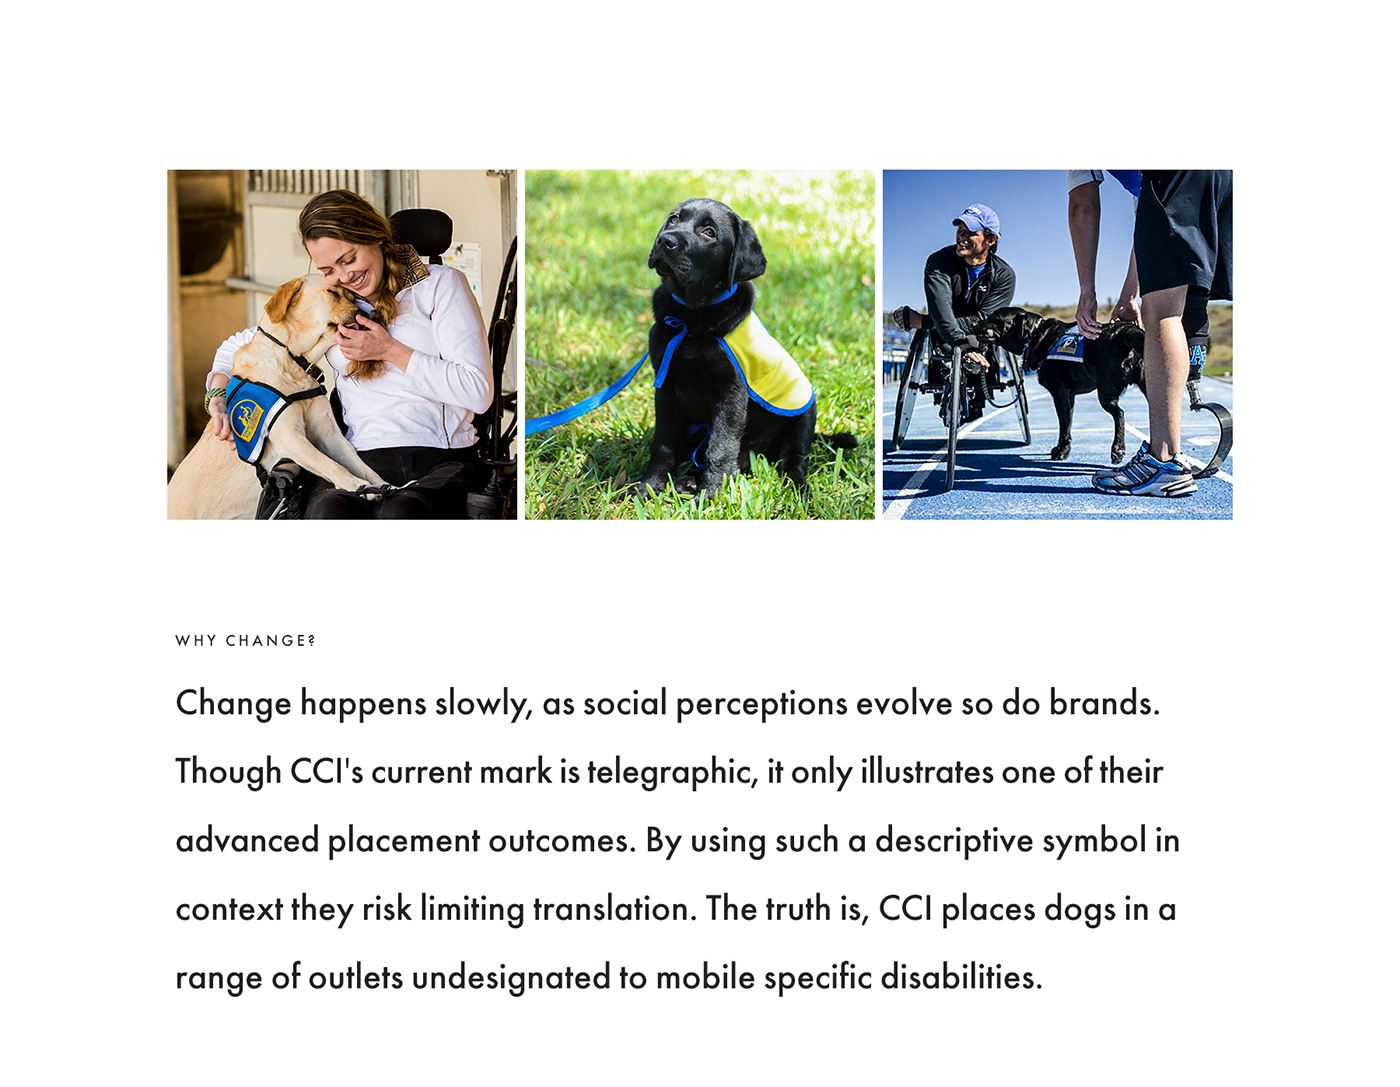 cci canine companion Independence Rebrand guide dog Service Dog puppy dog disability handicap wheelchair non-profit organization comite